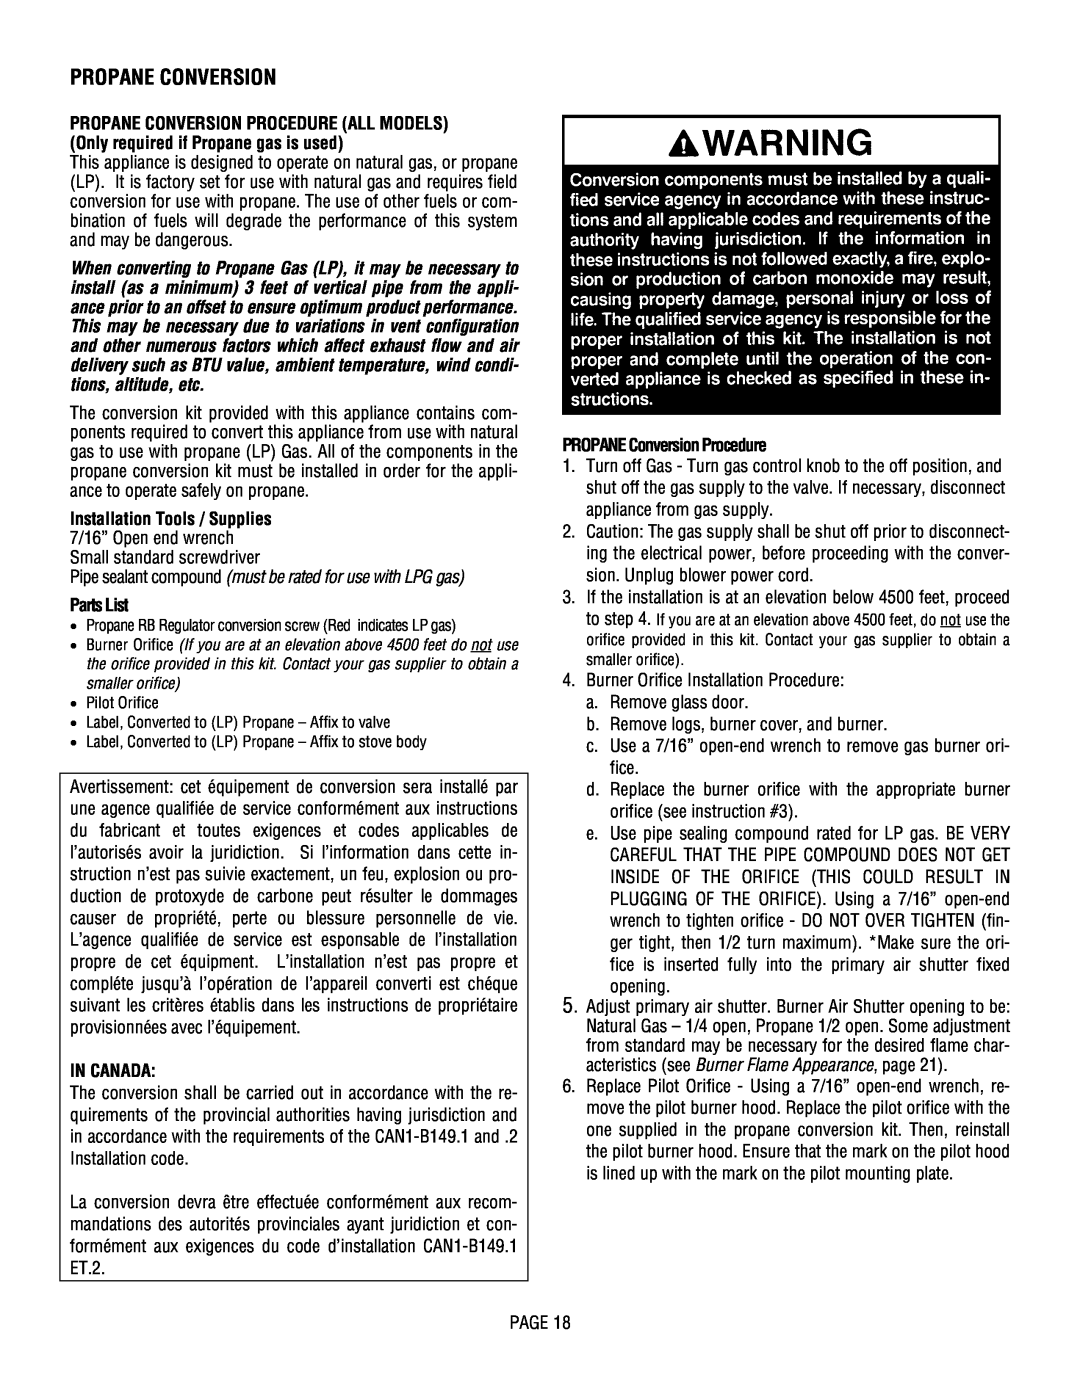 Lennox Hearth L20 DVF-2, L20 BF-2 manual Propane Conversion, Parts List, In Canada, PROPANE Conversion Procedure 